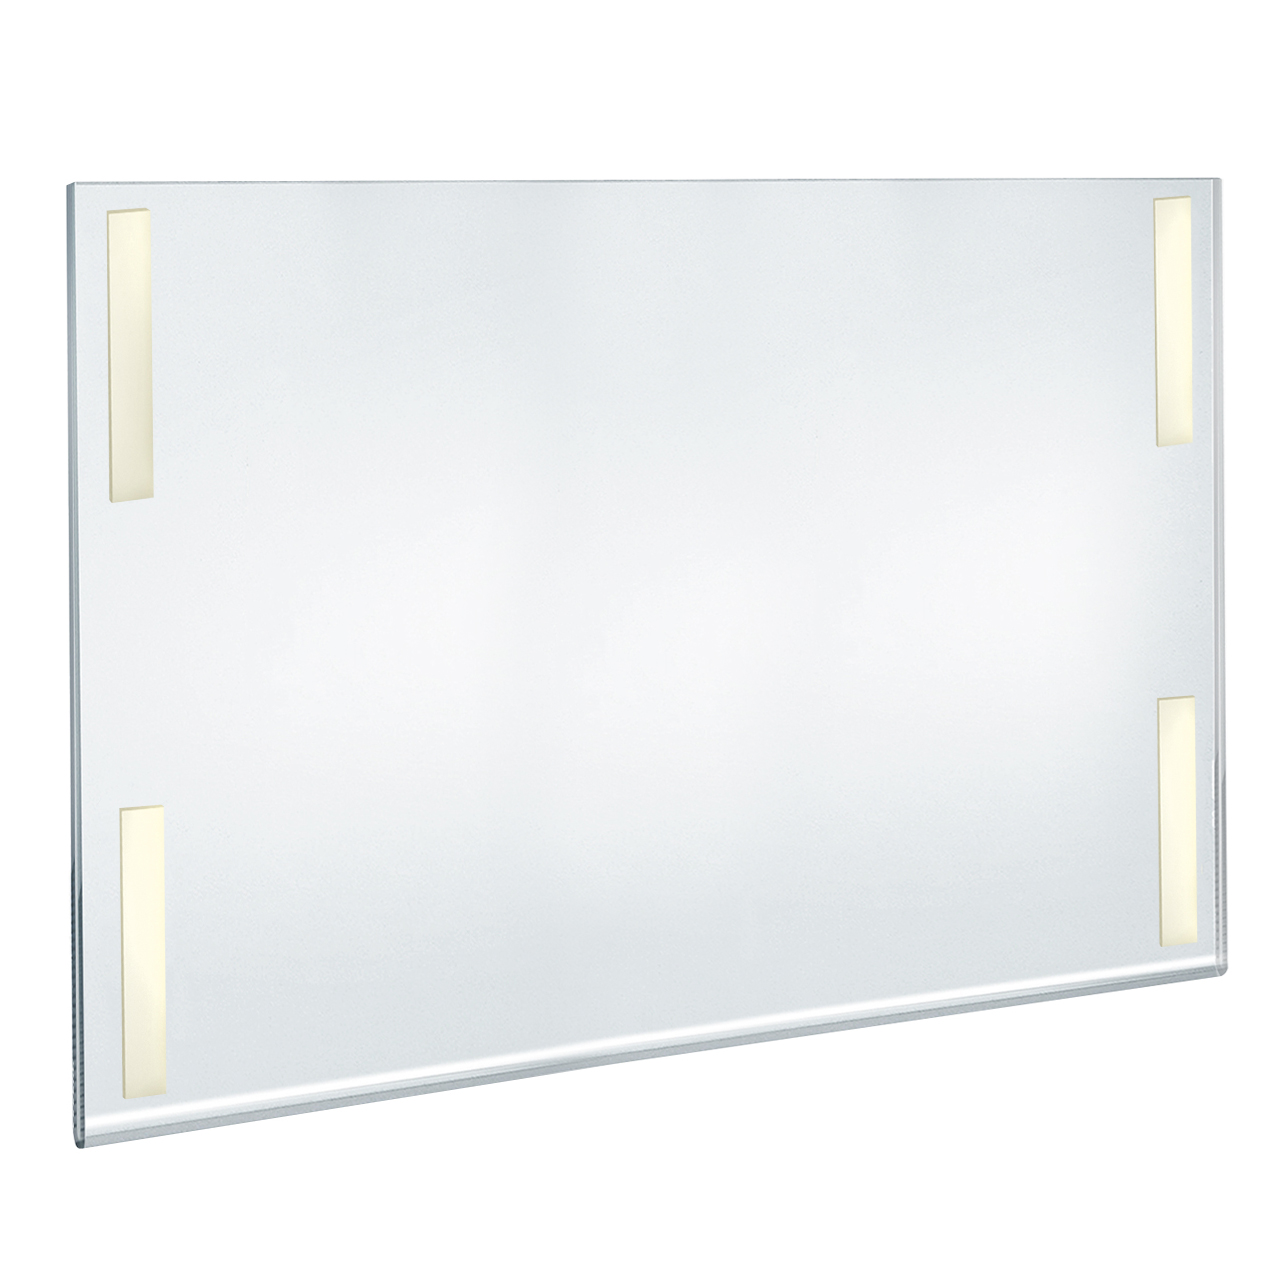 Azar Displays 122038 Self Adhesive Clear Acrylic Wall Sign Holder Frame 22